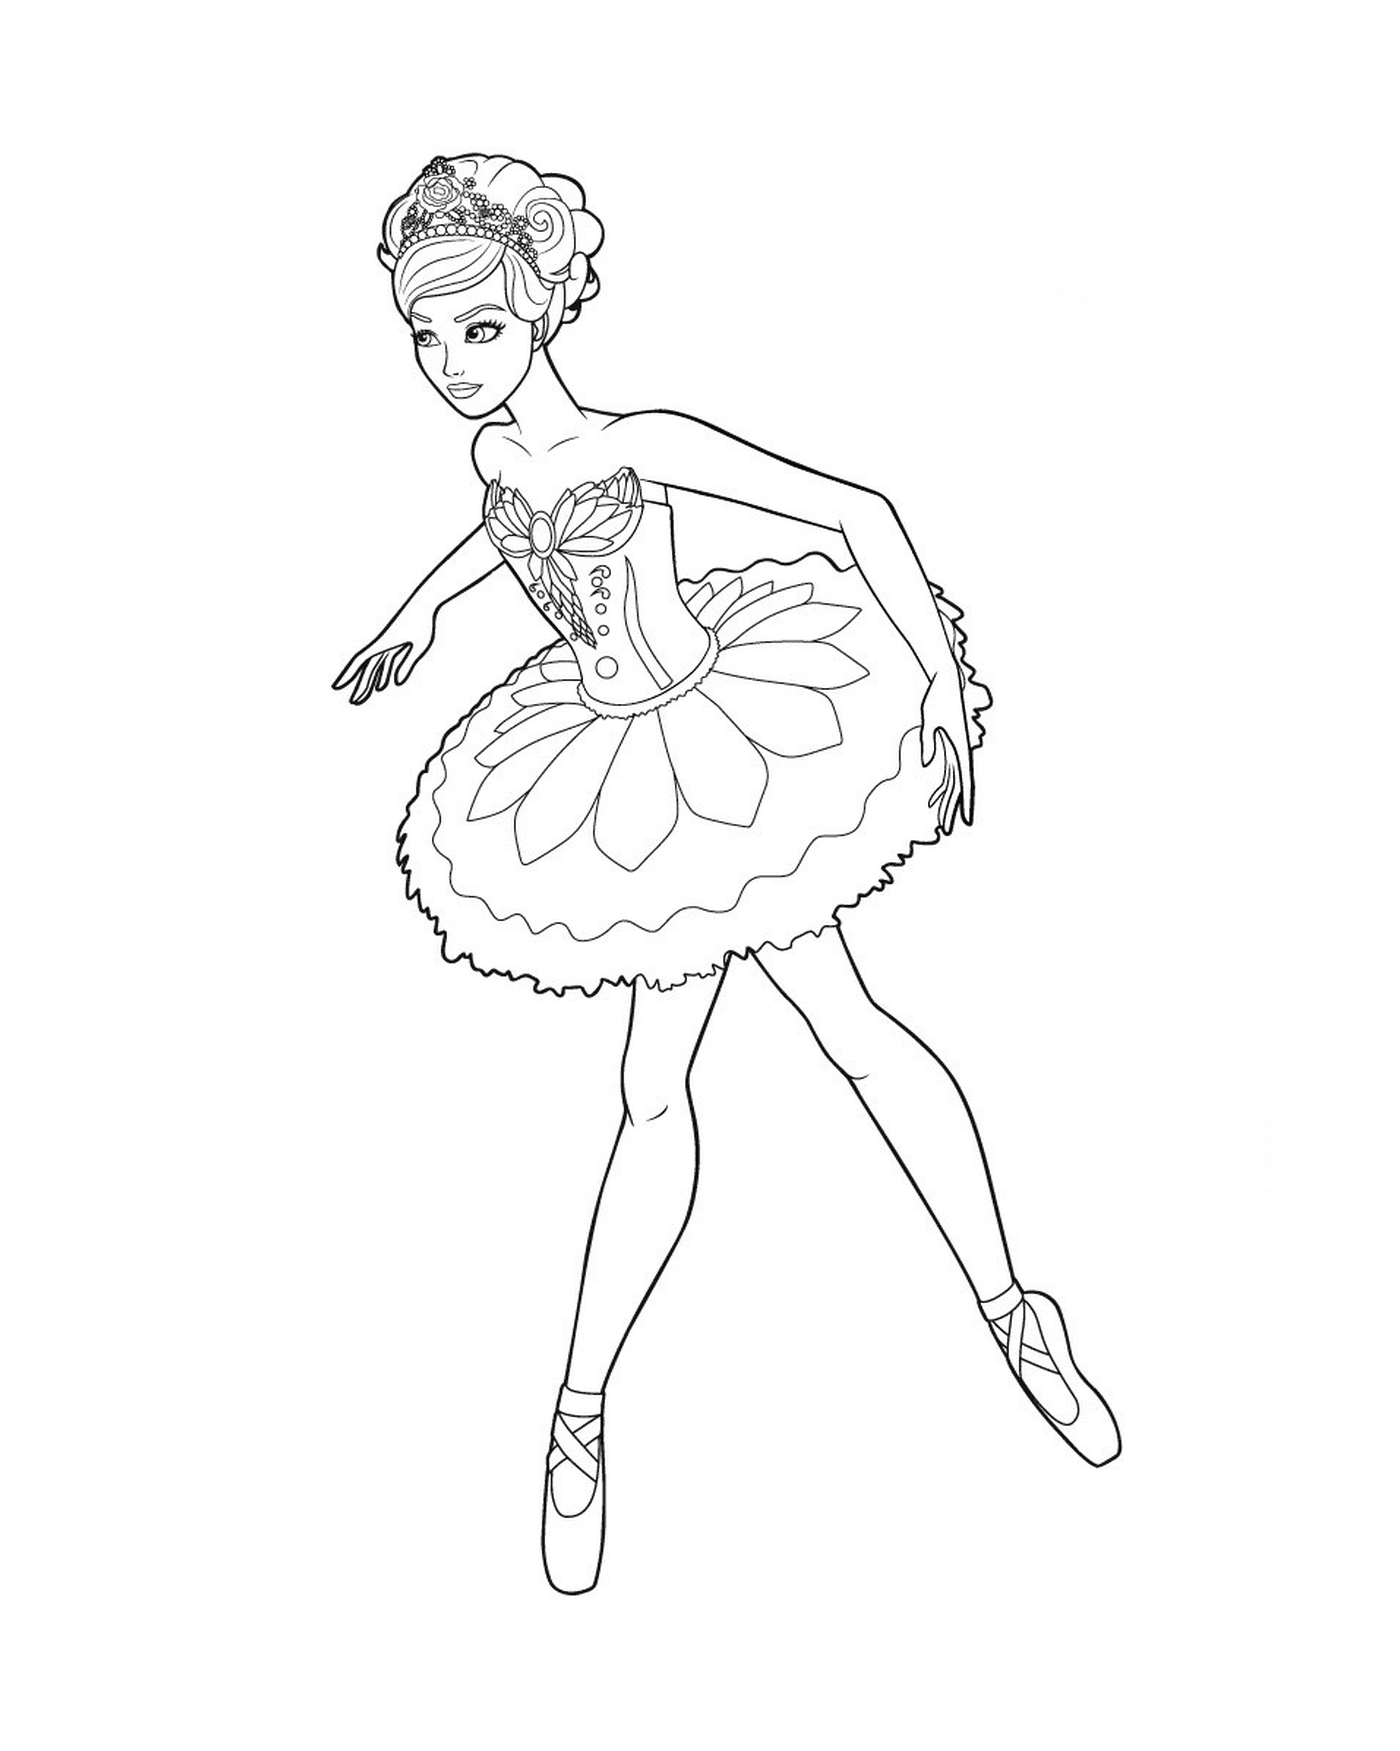  an image of a ballerina 